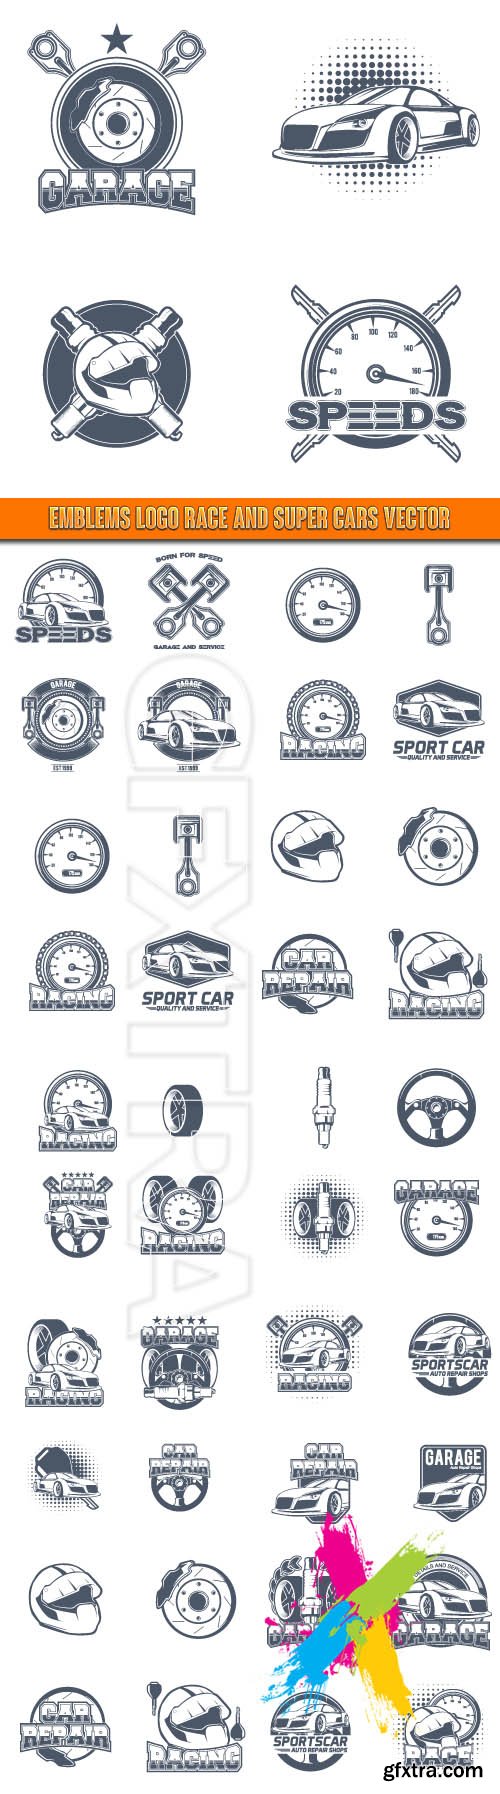 Emblems logo race and super cars vector